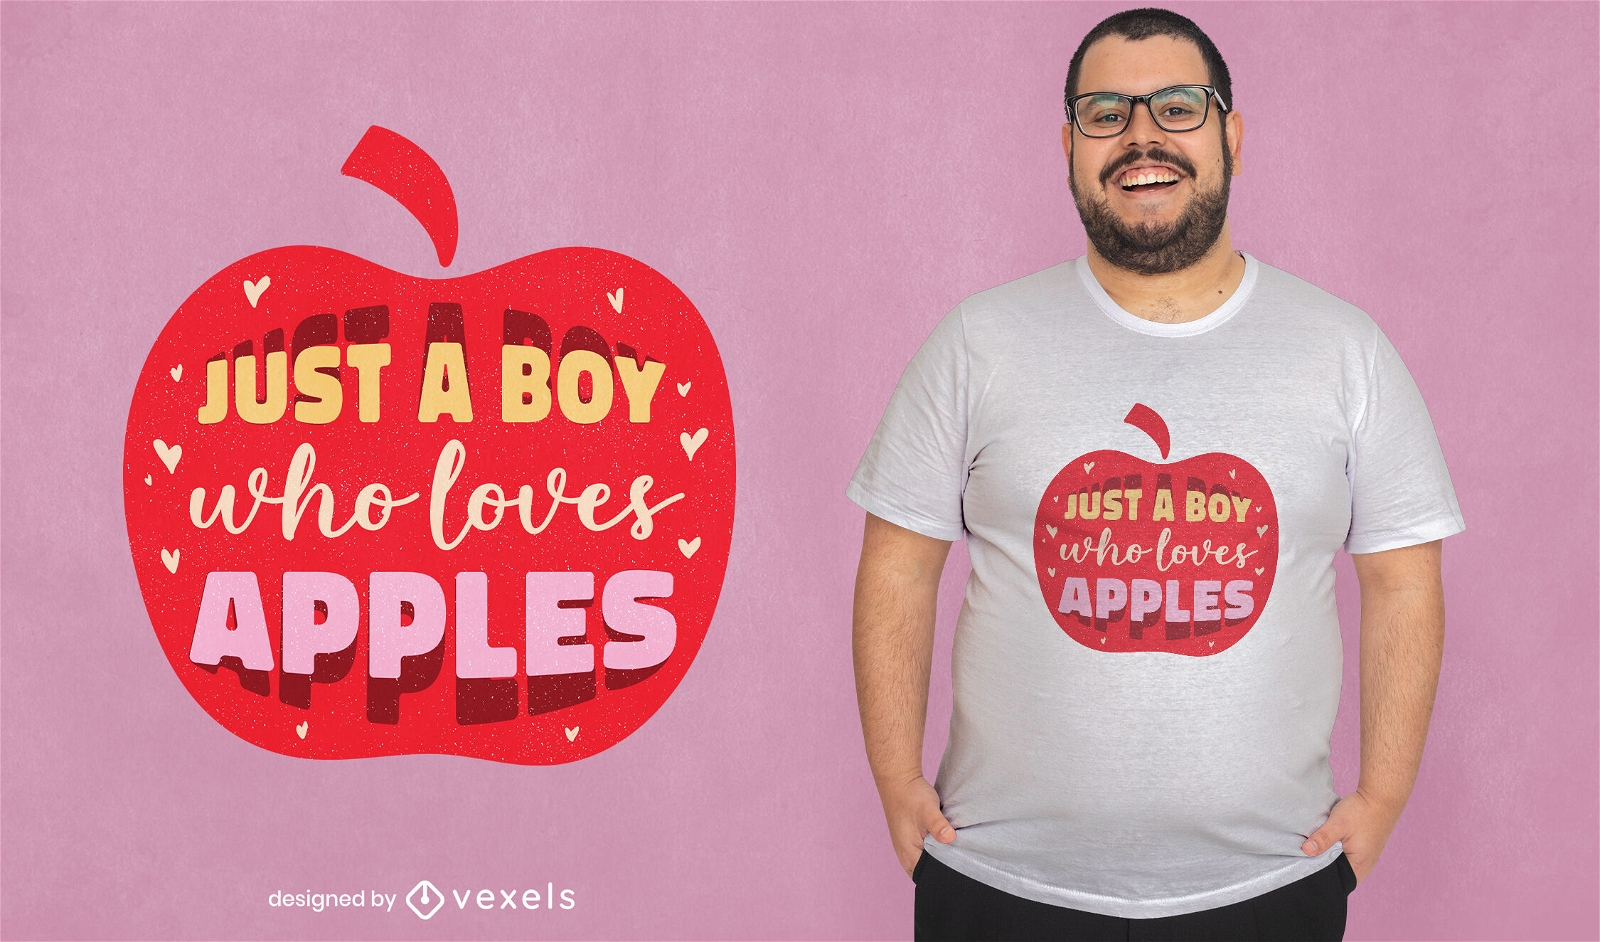 A boy who loves apples t-shirt design